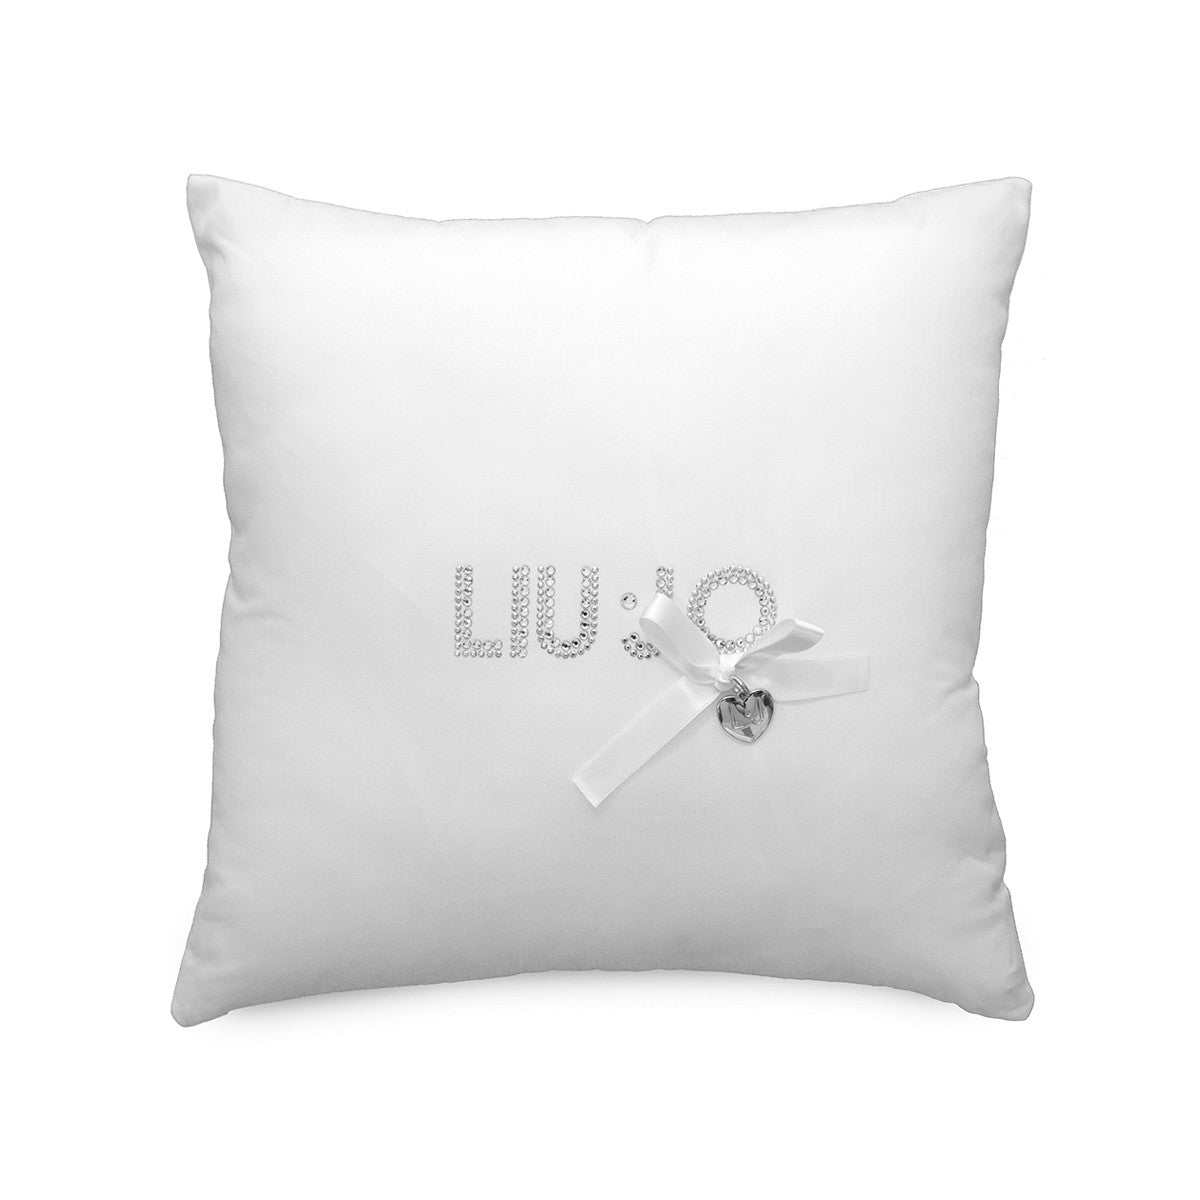 Liu Jo square furniture cushion in satin Solid color 40x40 cm U669 WHITE